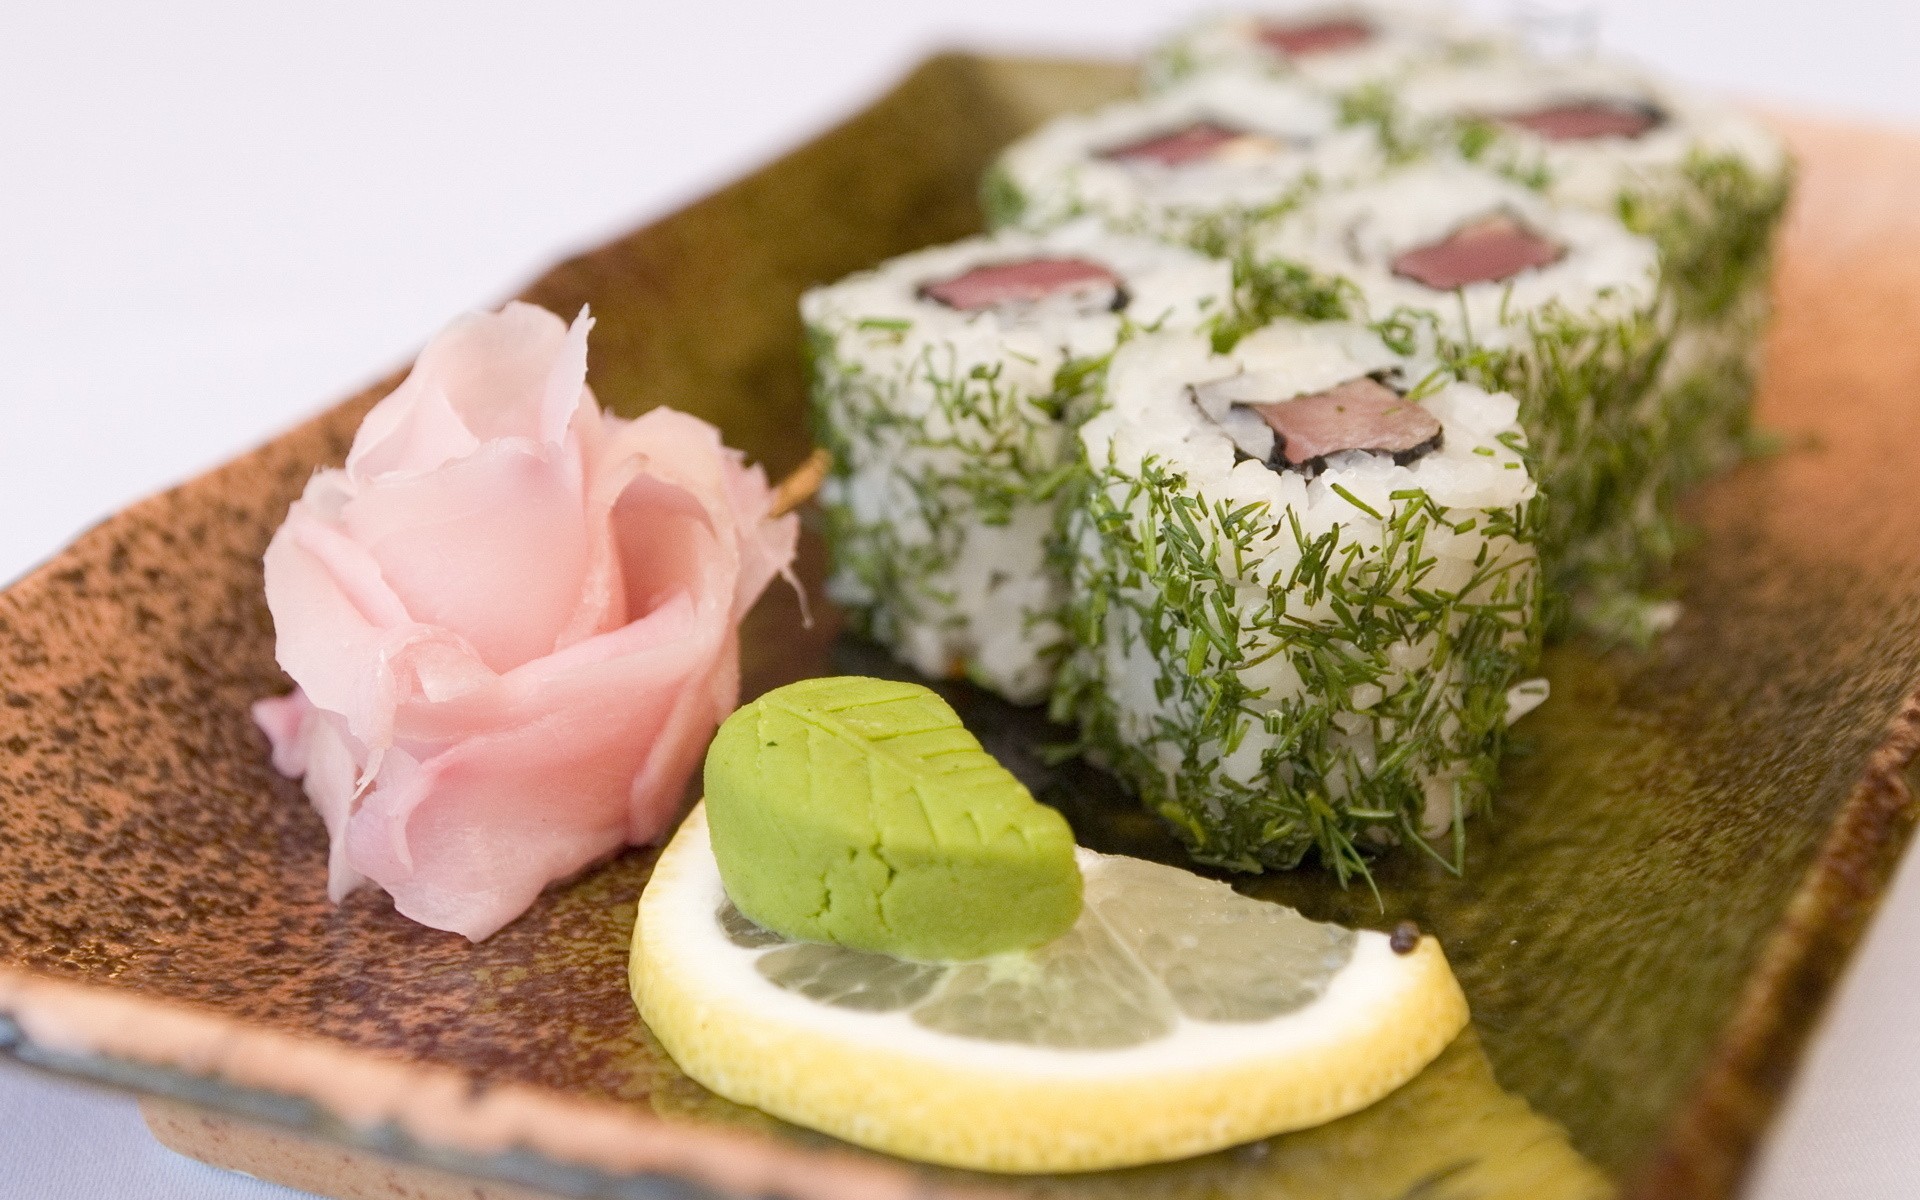 Free download wallpaper Food, Sushi on your PC desktop